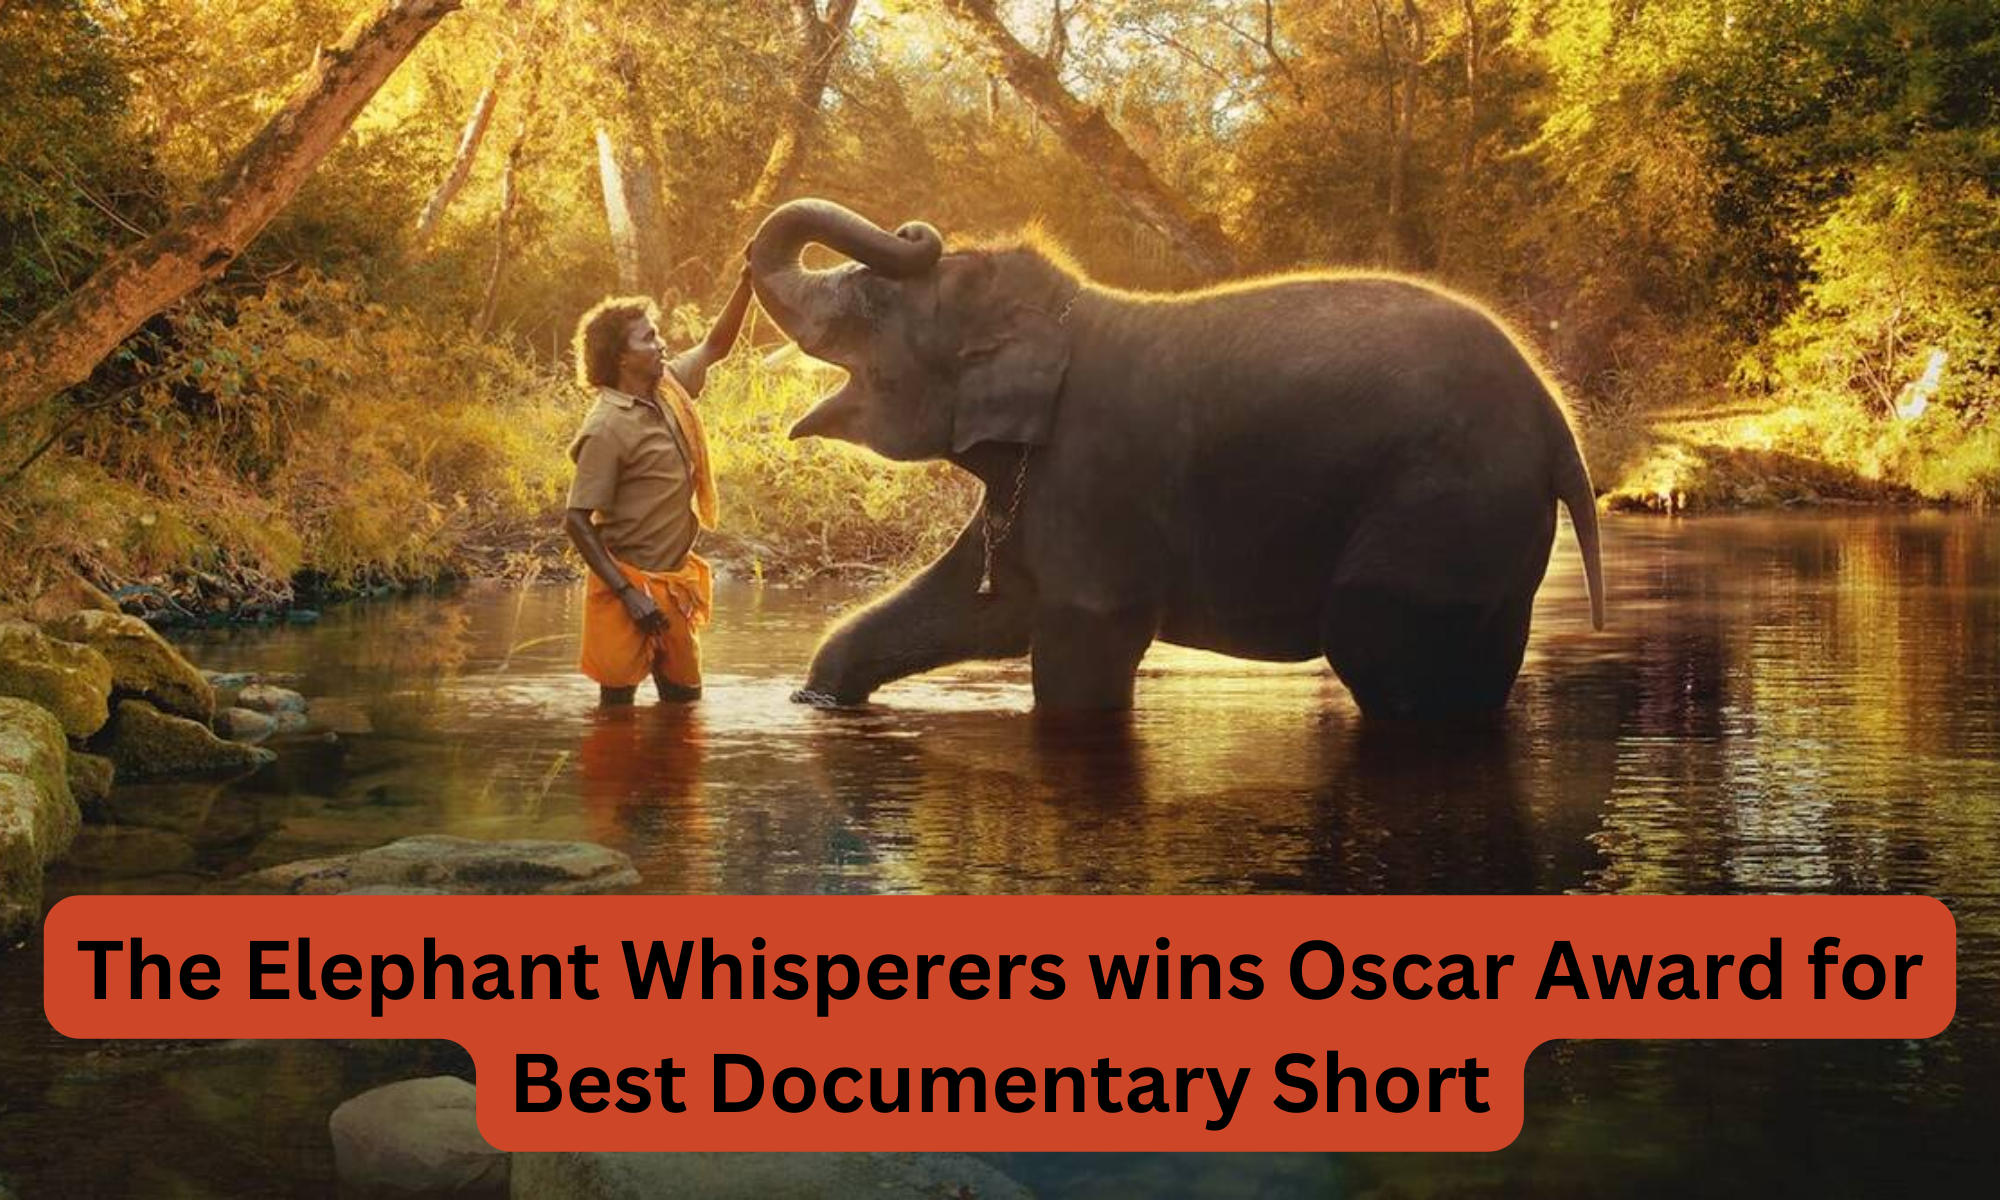 The Elephant Whisperers wins Oscar Award for Best Documentary Short